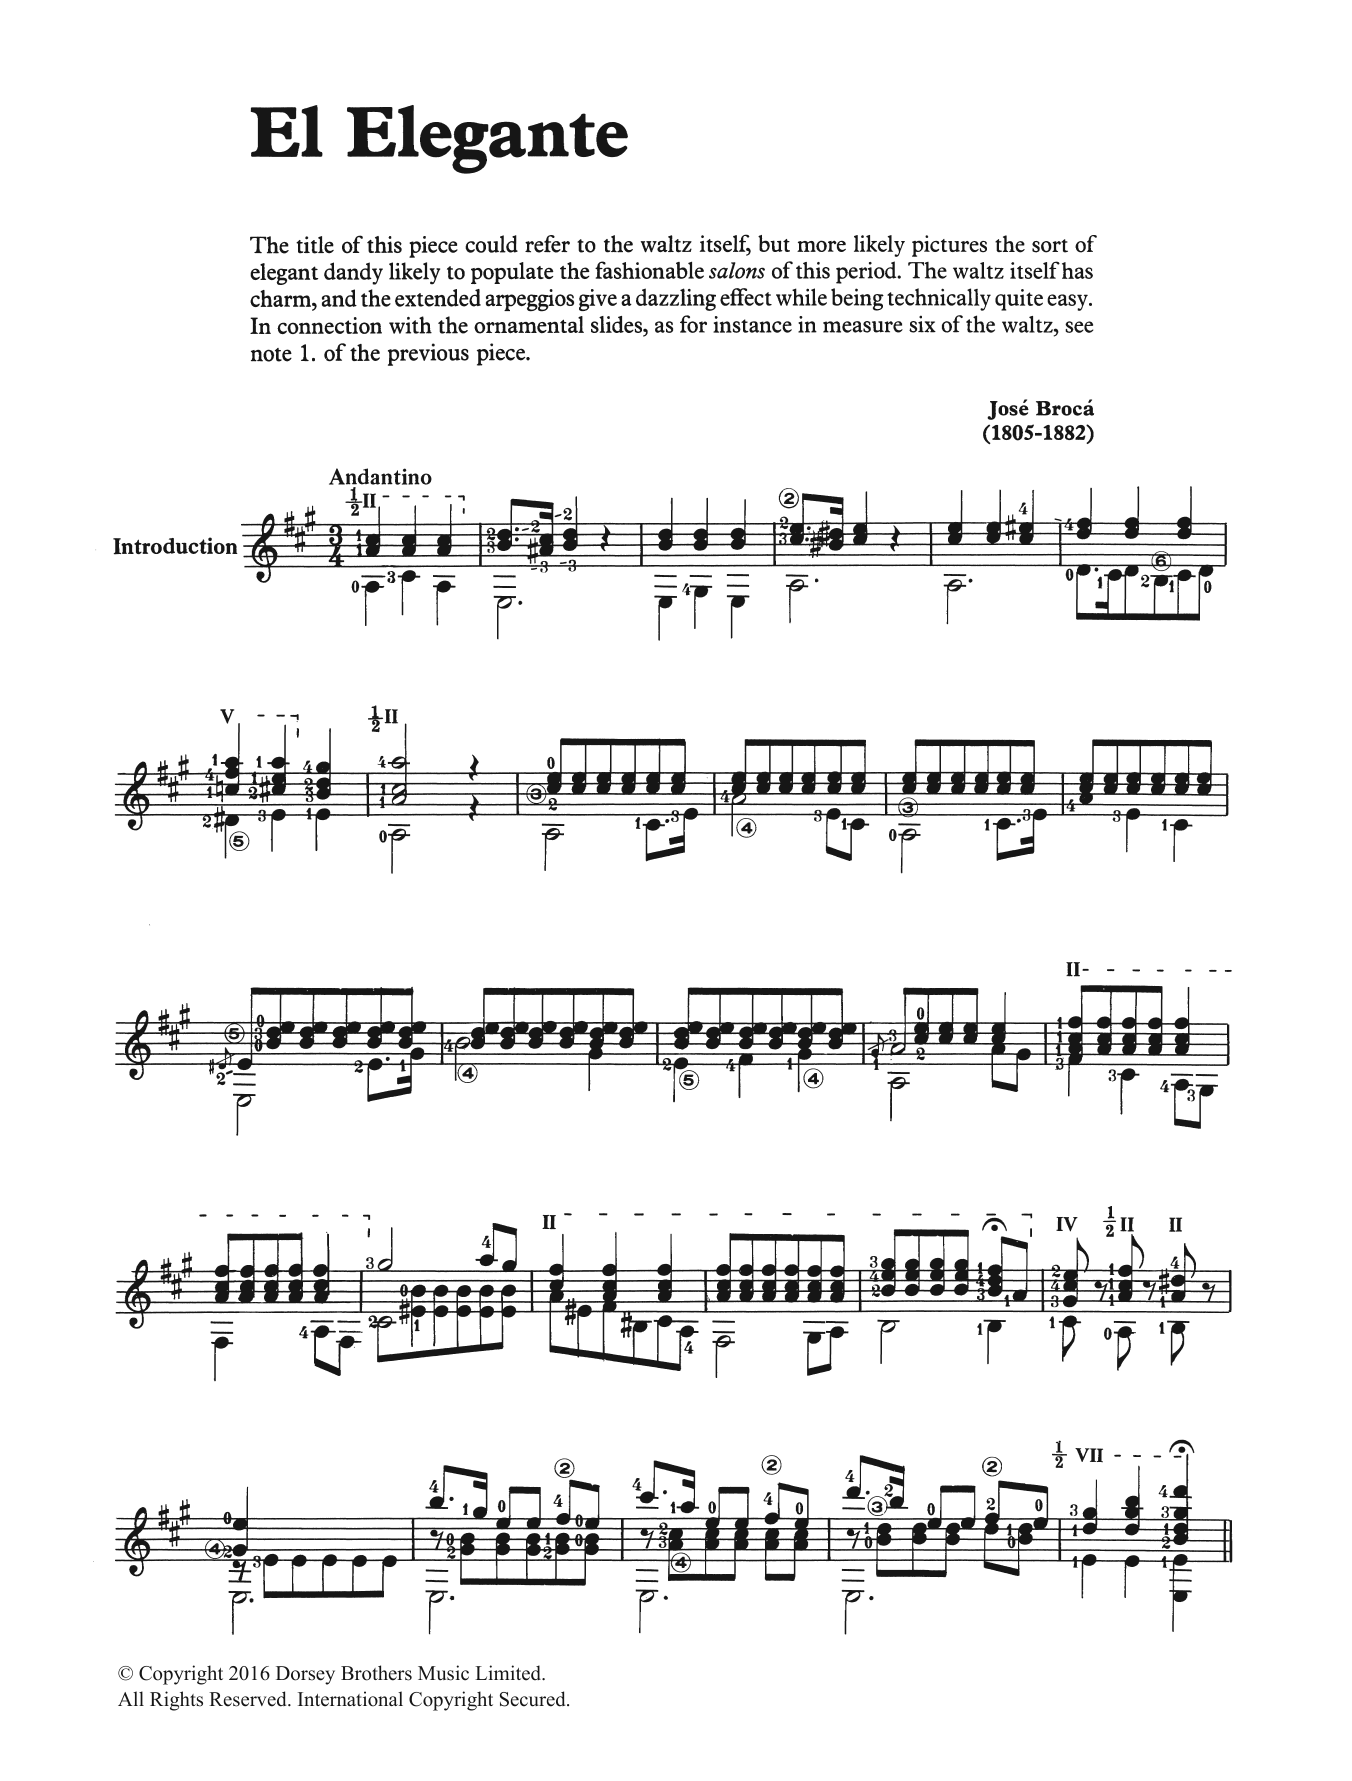 José Brocá El Elegante Sheet Music Notes & Chords for Guitar - Download or Print PDF